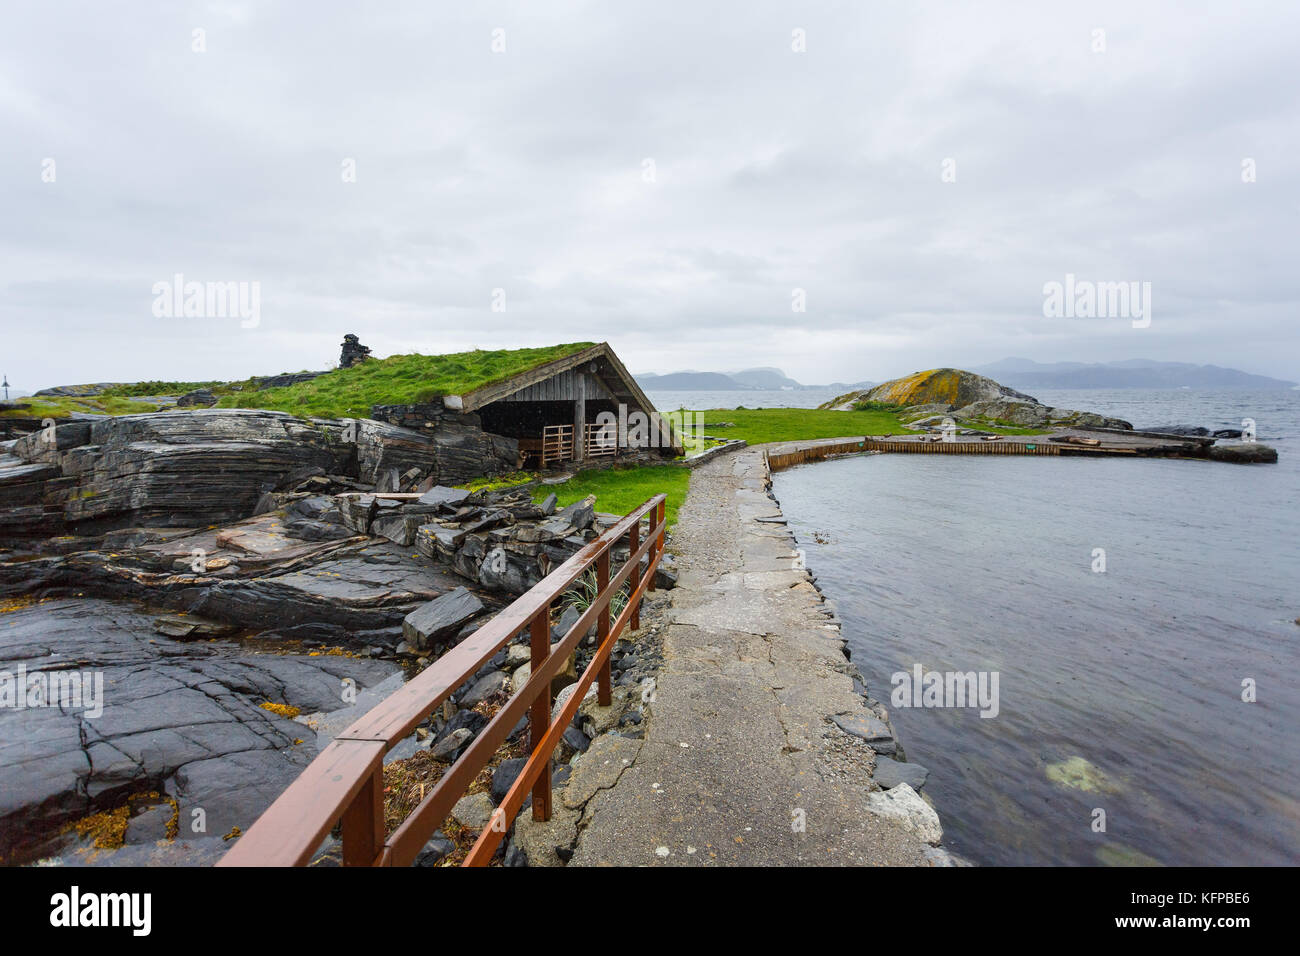 Abandoned wooden house on the stony shore of Norwegian island in rainy weather Stock Photo